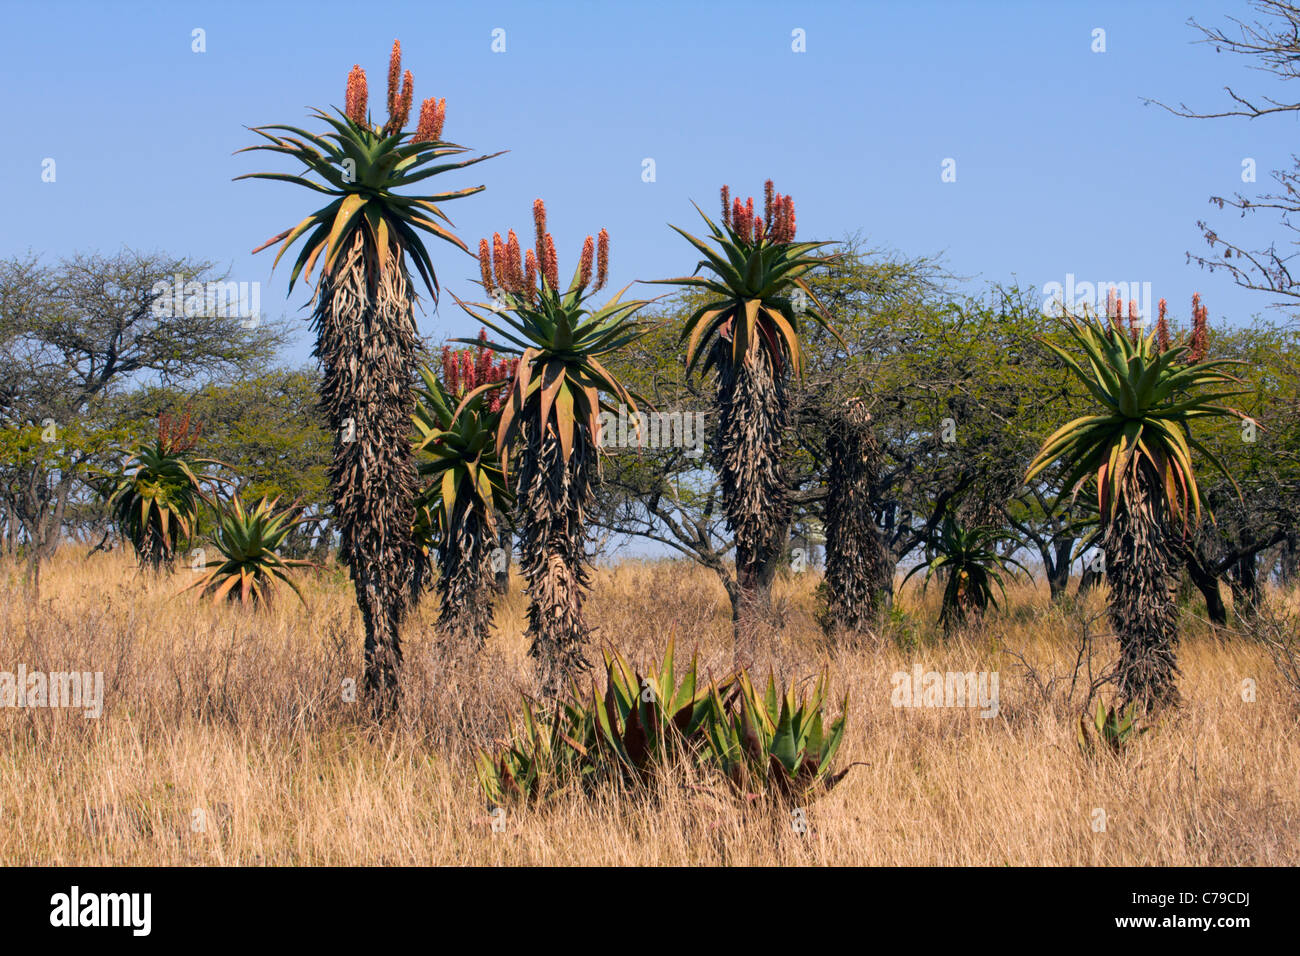 Cape Aloe plants growing in Tala Game Reserve, near Pietermaritzburg, KwaZulu-Natal, South Africa. Stock Photo